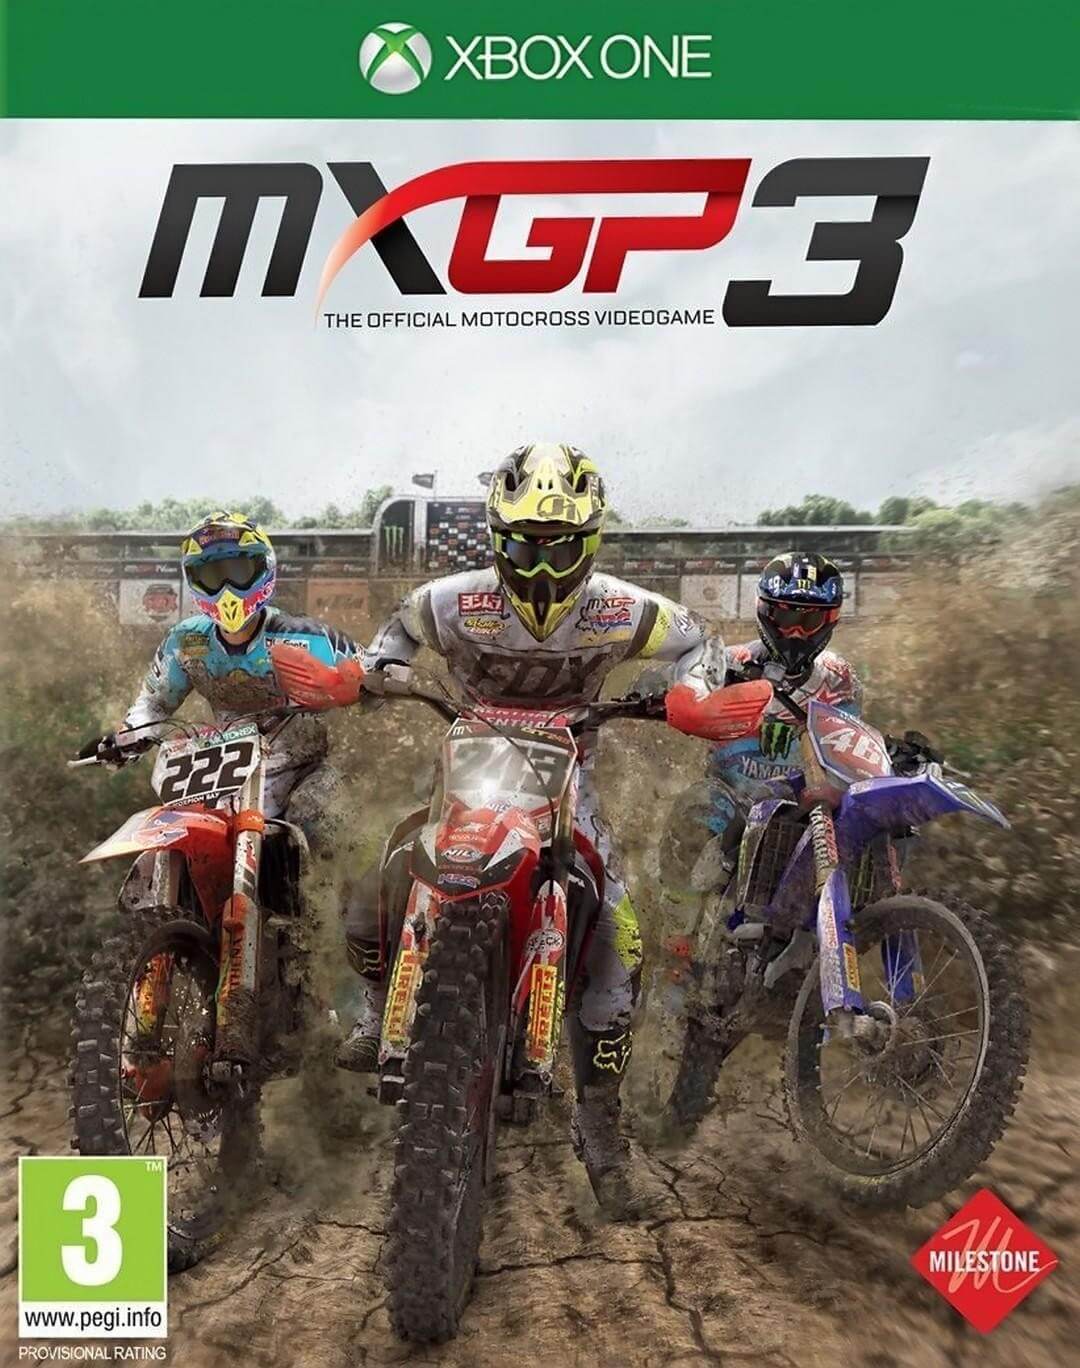 MXGP3 - The Official Motocross Videogame XBOX